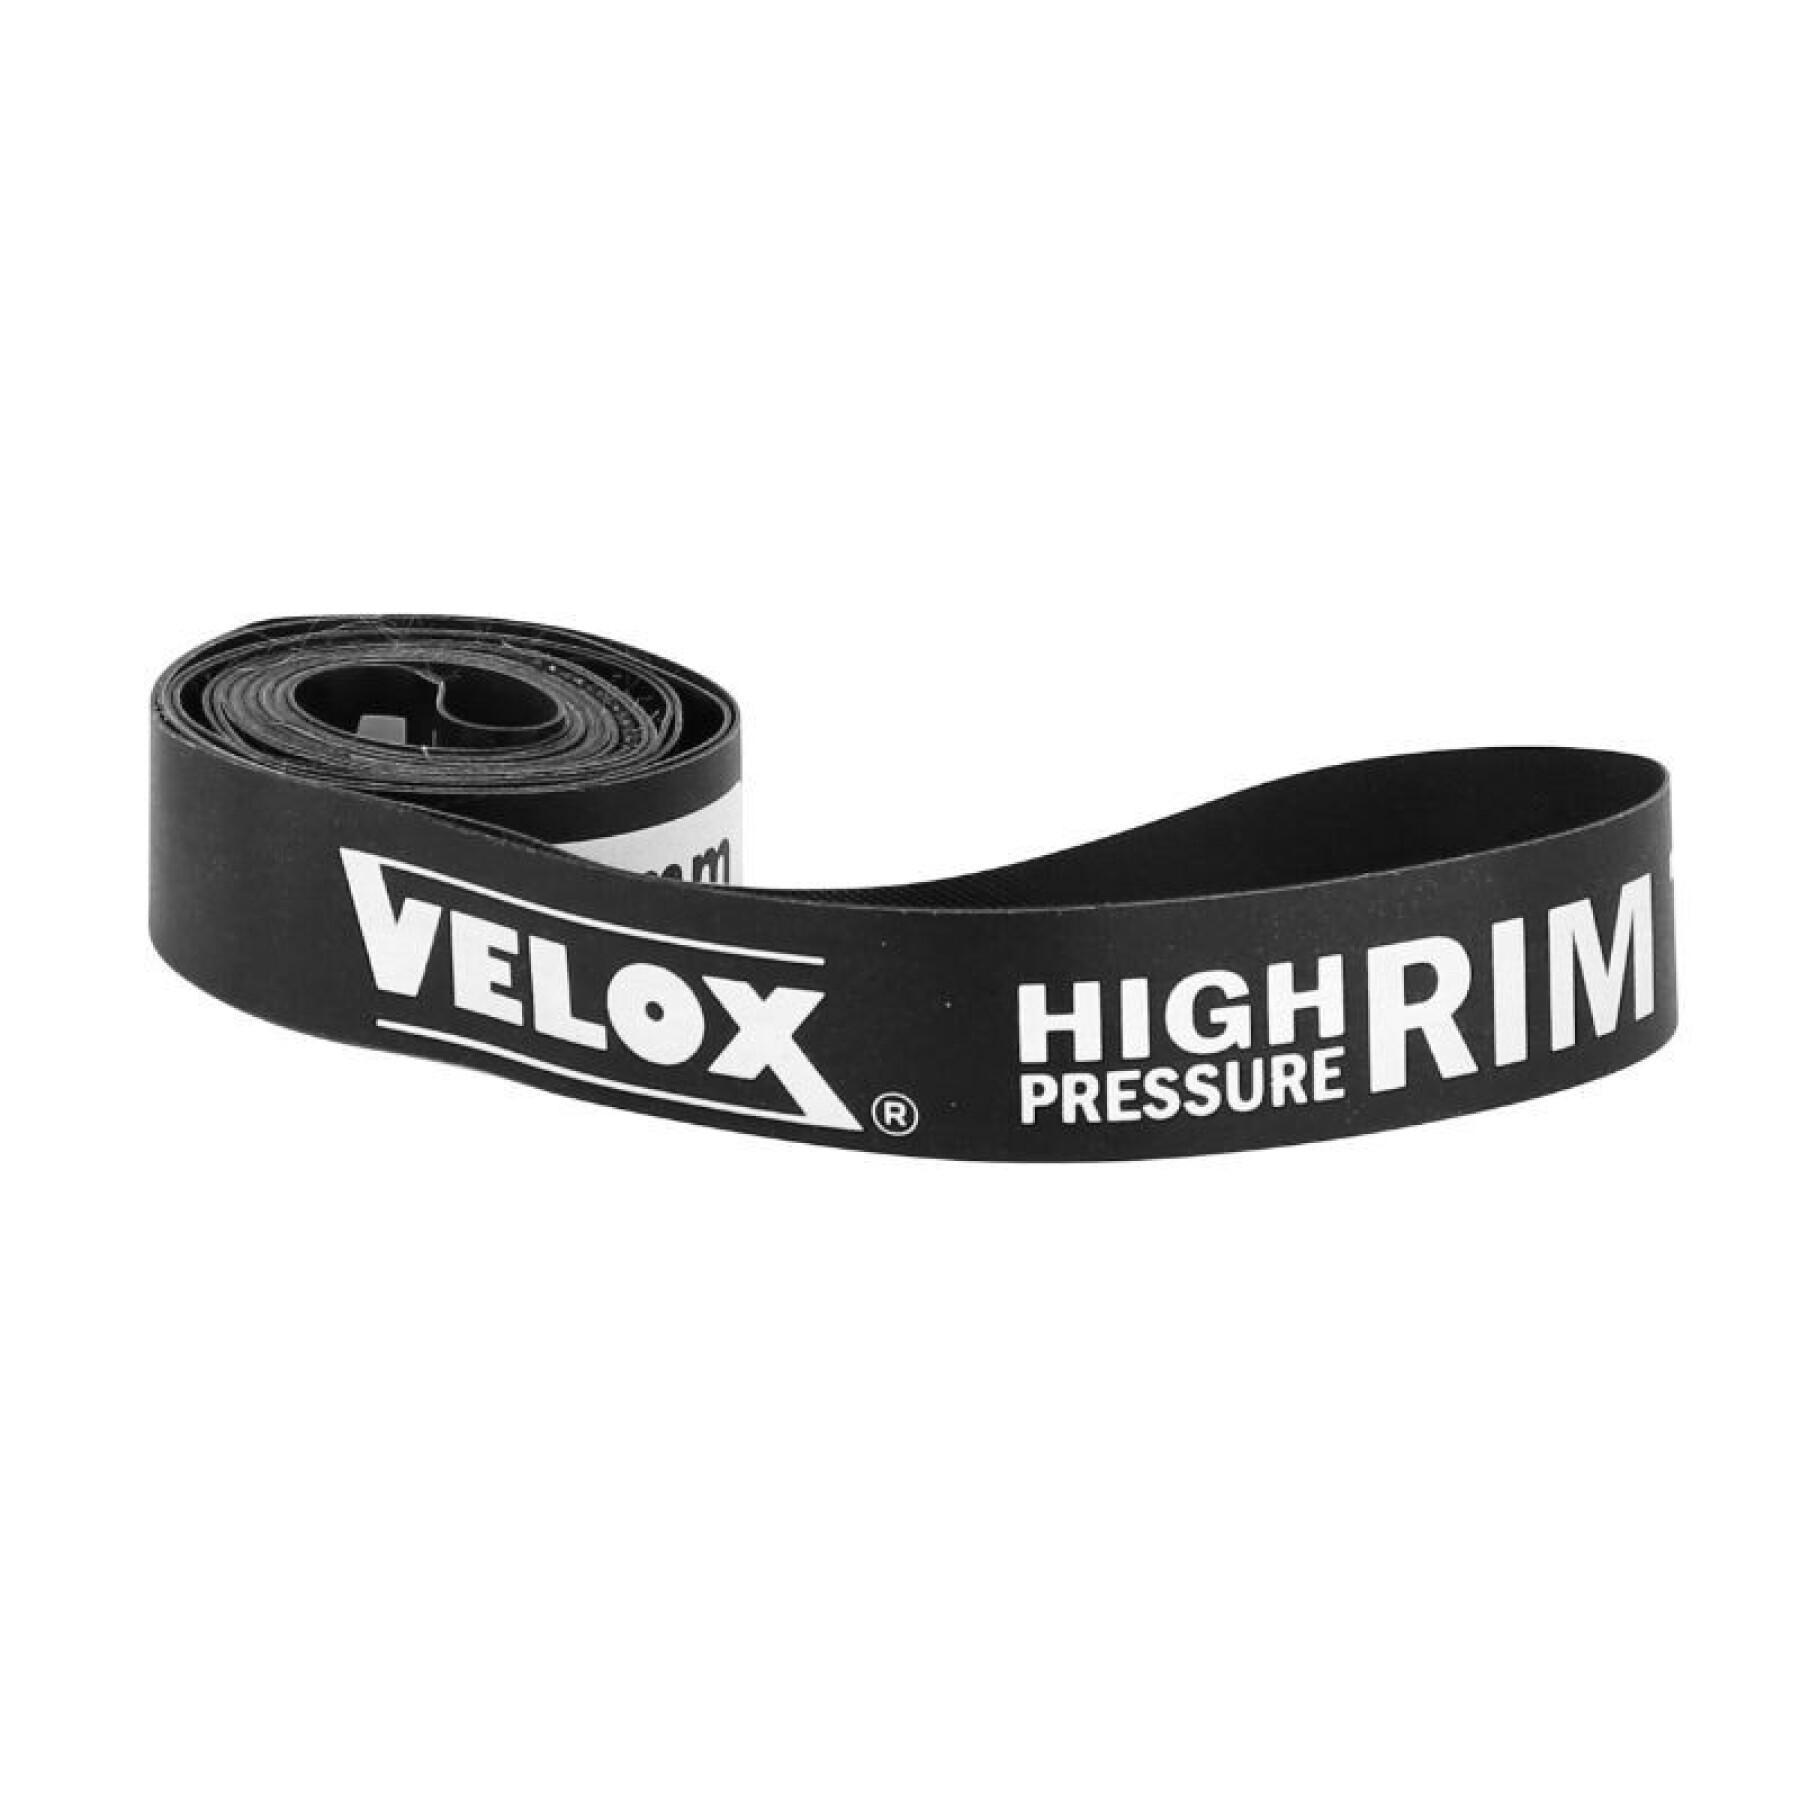 Bulk 29" high pressure rim tape Velox